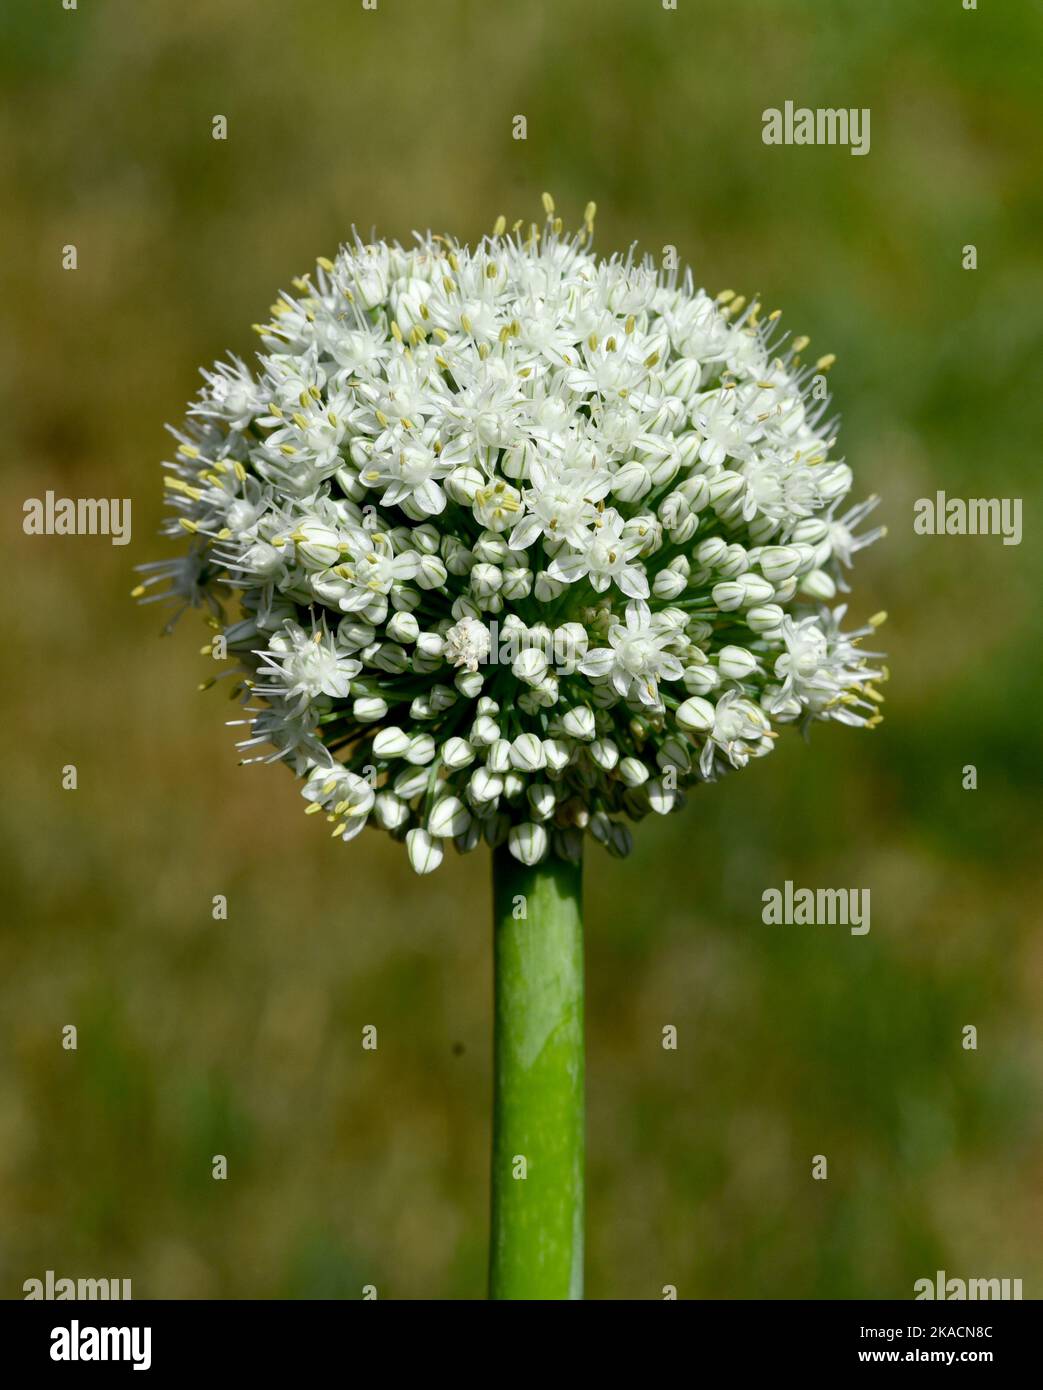 Zwiebel, Allium cepa, ist eine Heilpflanze, und eine der wichtigsten Kuechenkraeuter. La cebolla, Allium cepa, es una planta medicinal y una de las más impías Foto de stock